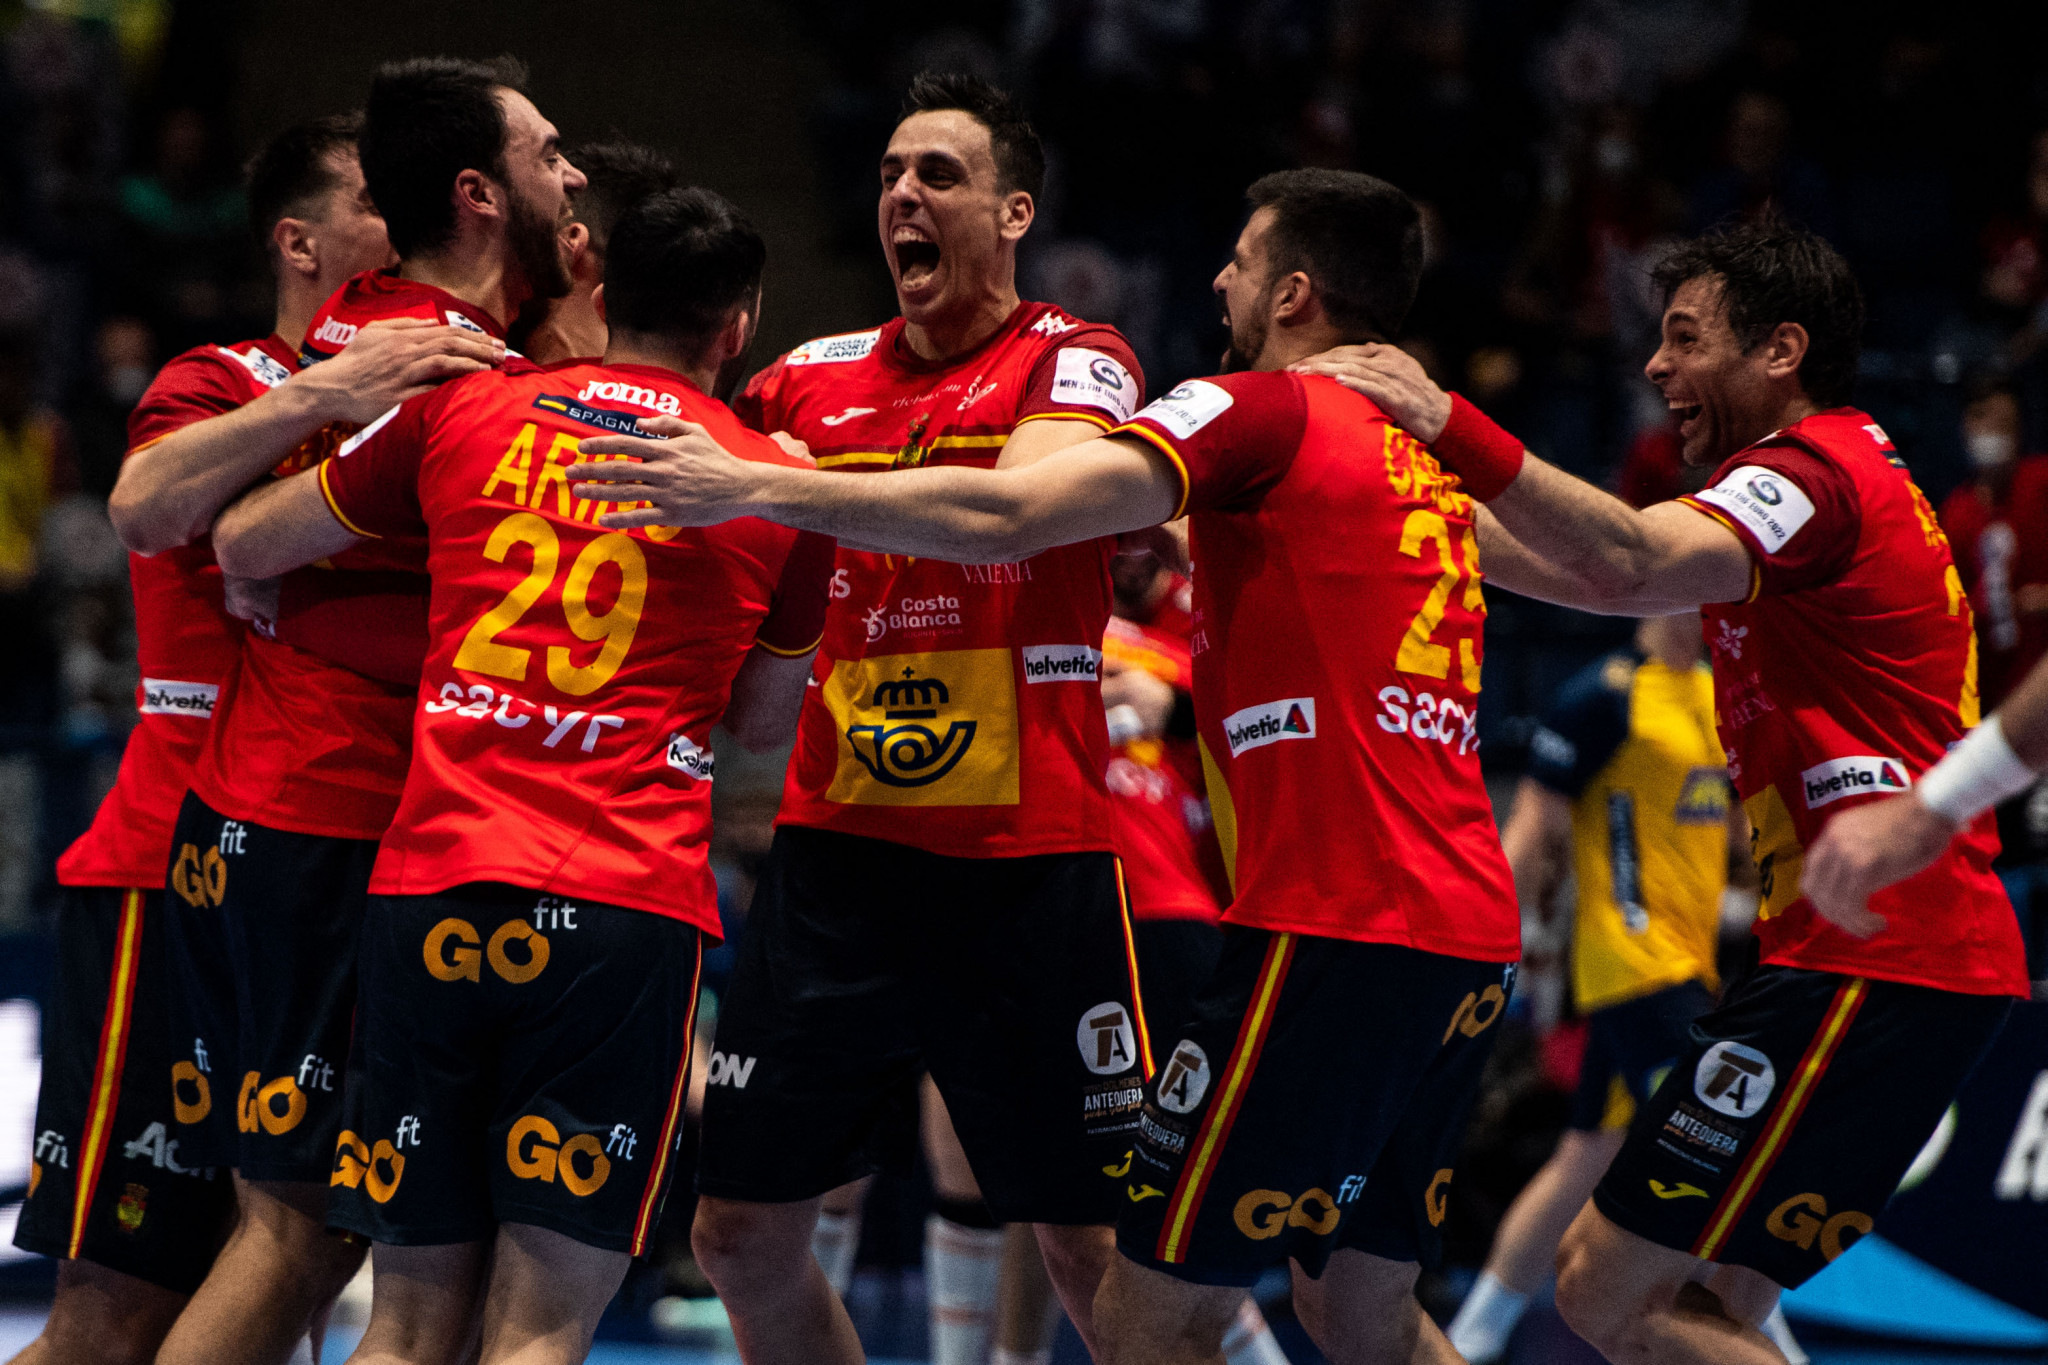 Holders Spain edge past Russia as main round of European Men's Handball Championship continues